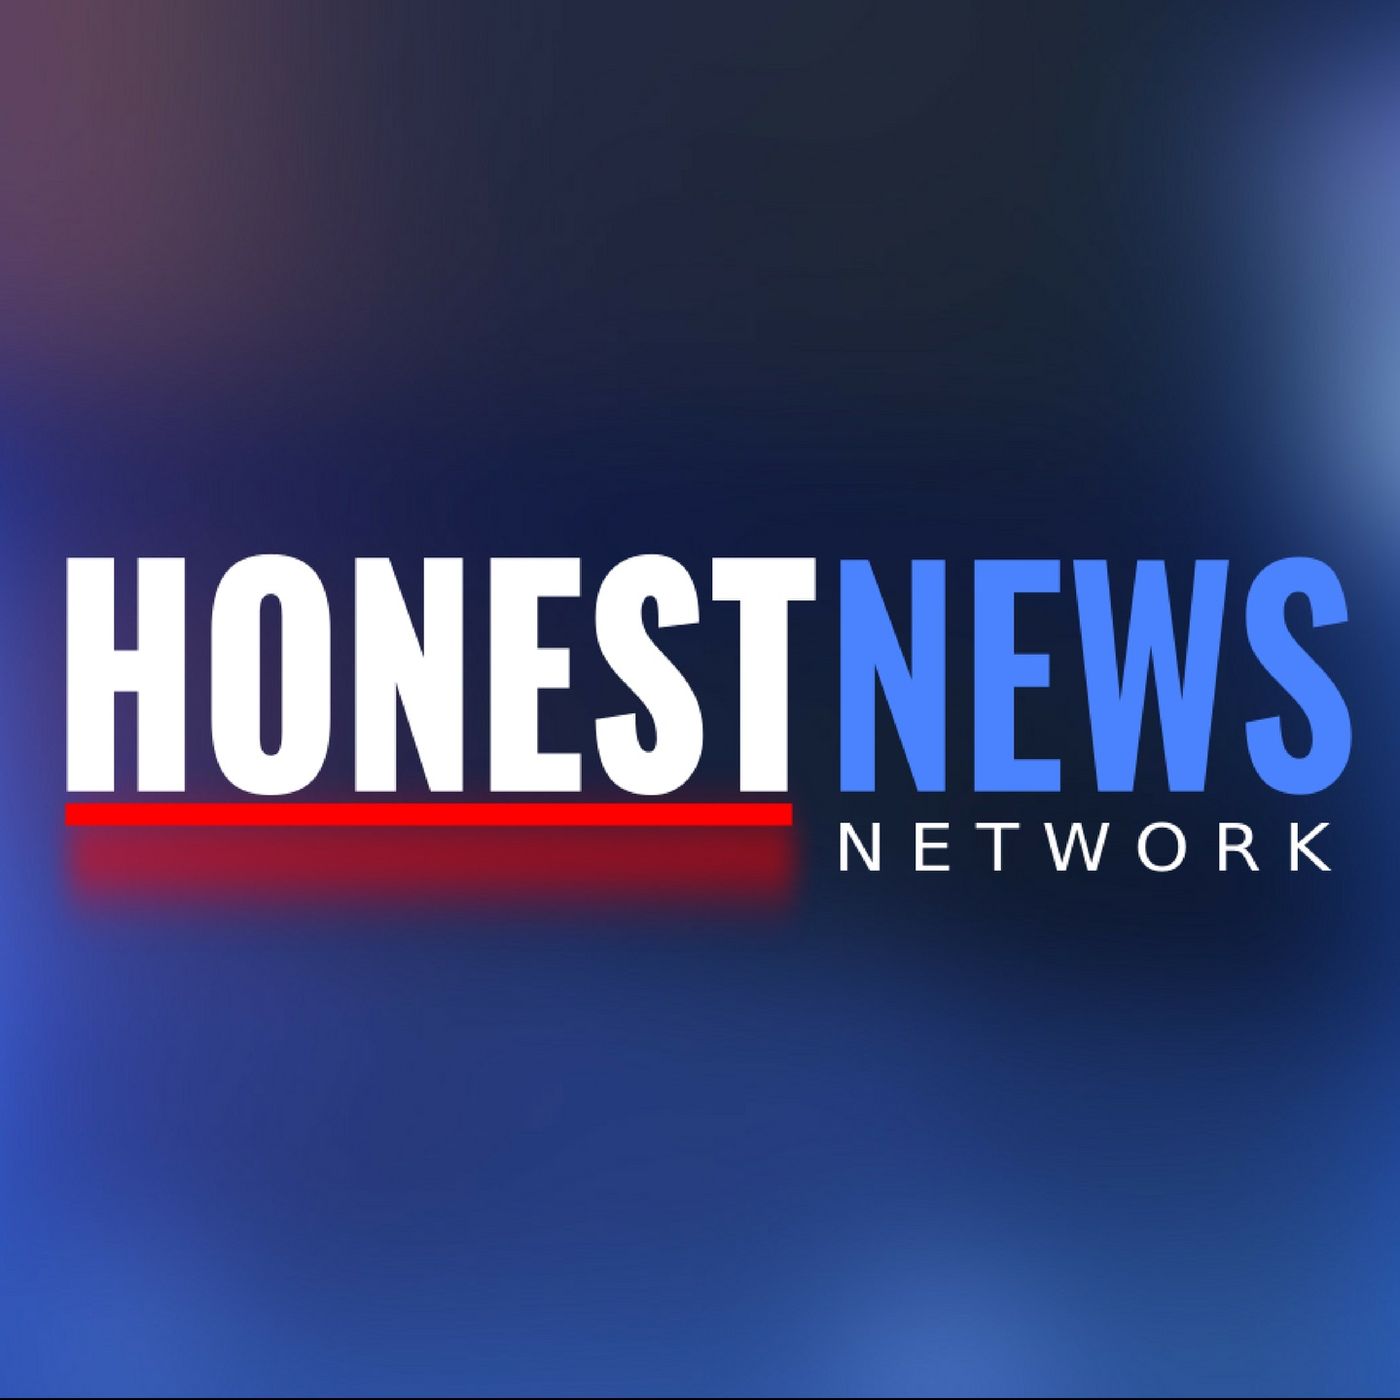 Honest News Network